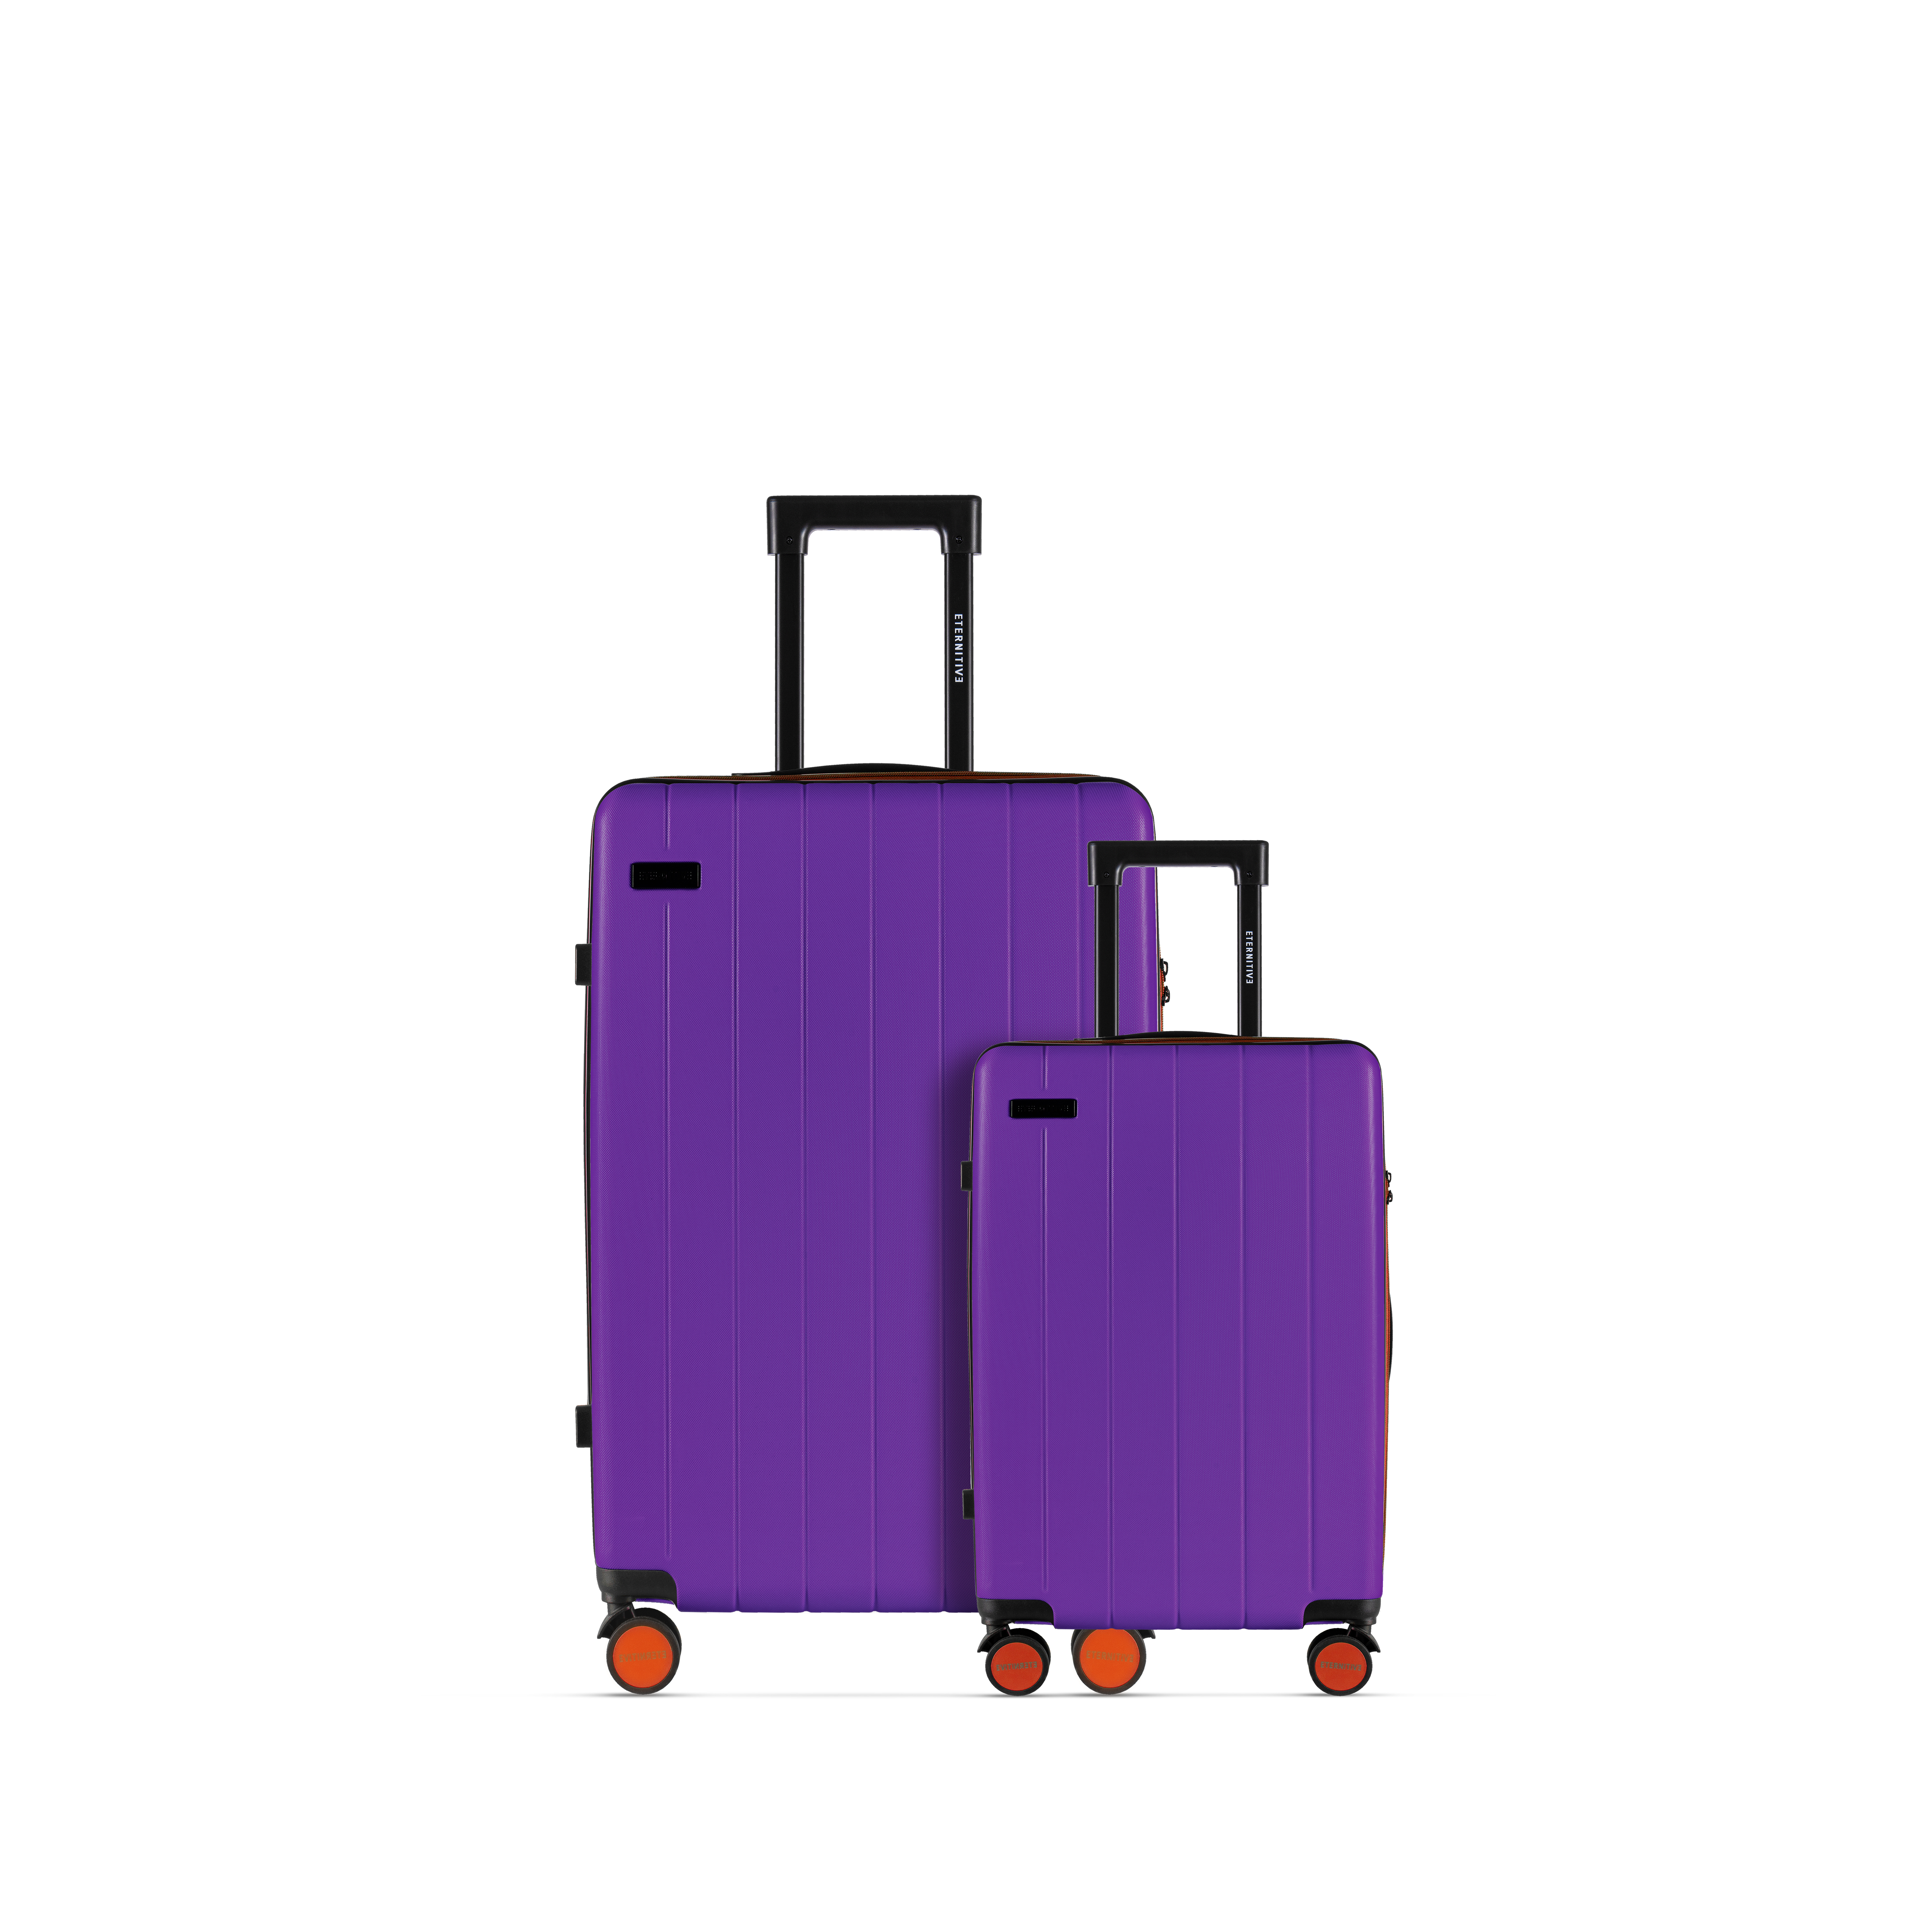 JOY set purple: cabin + large